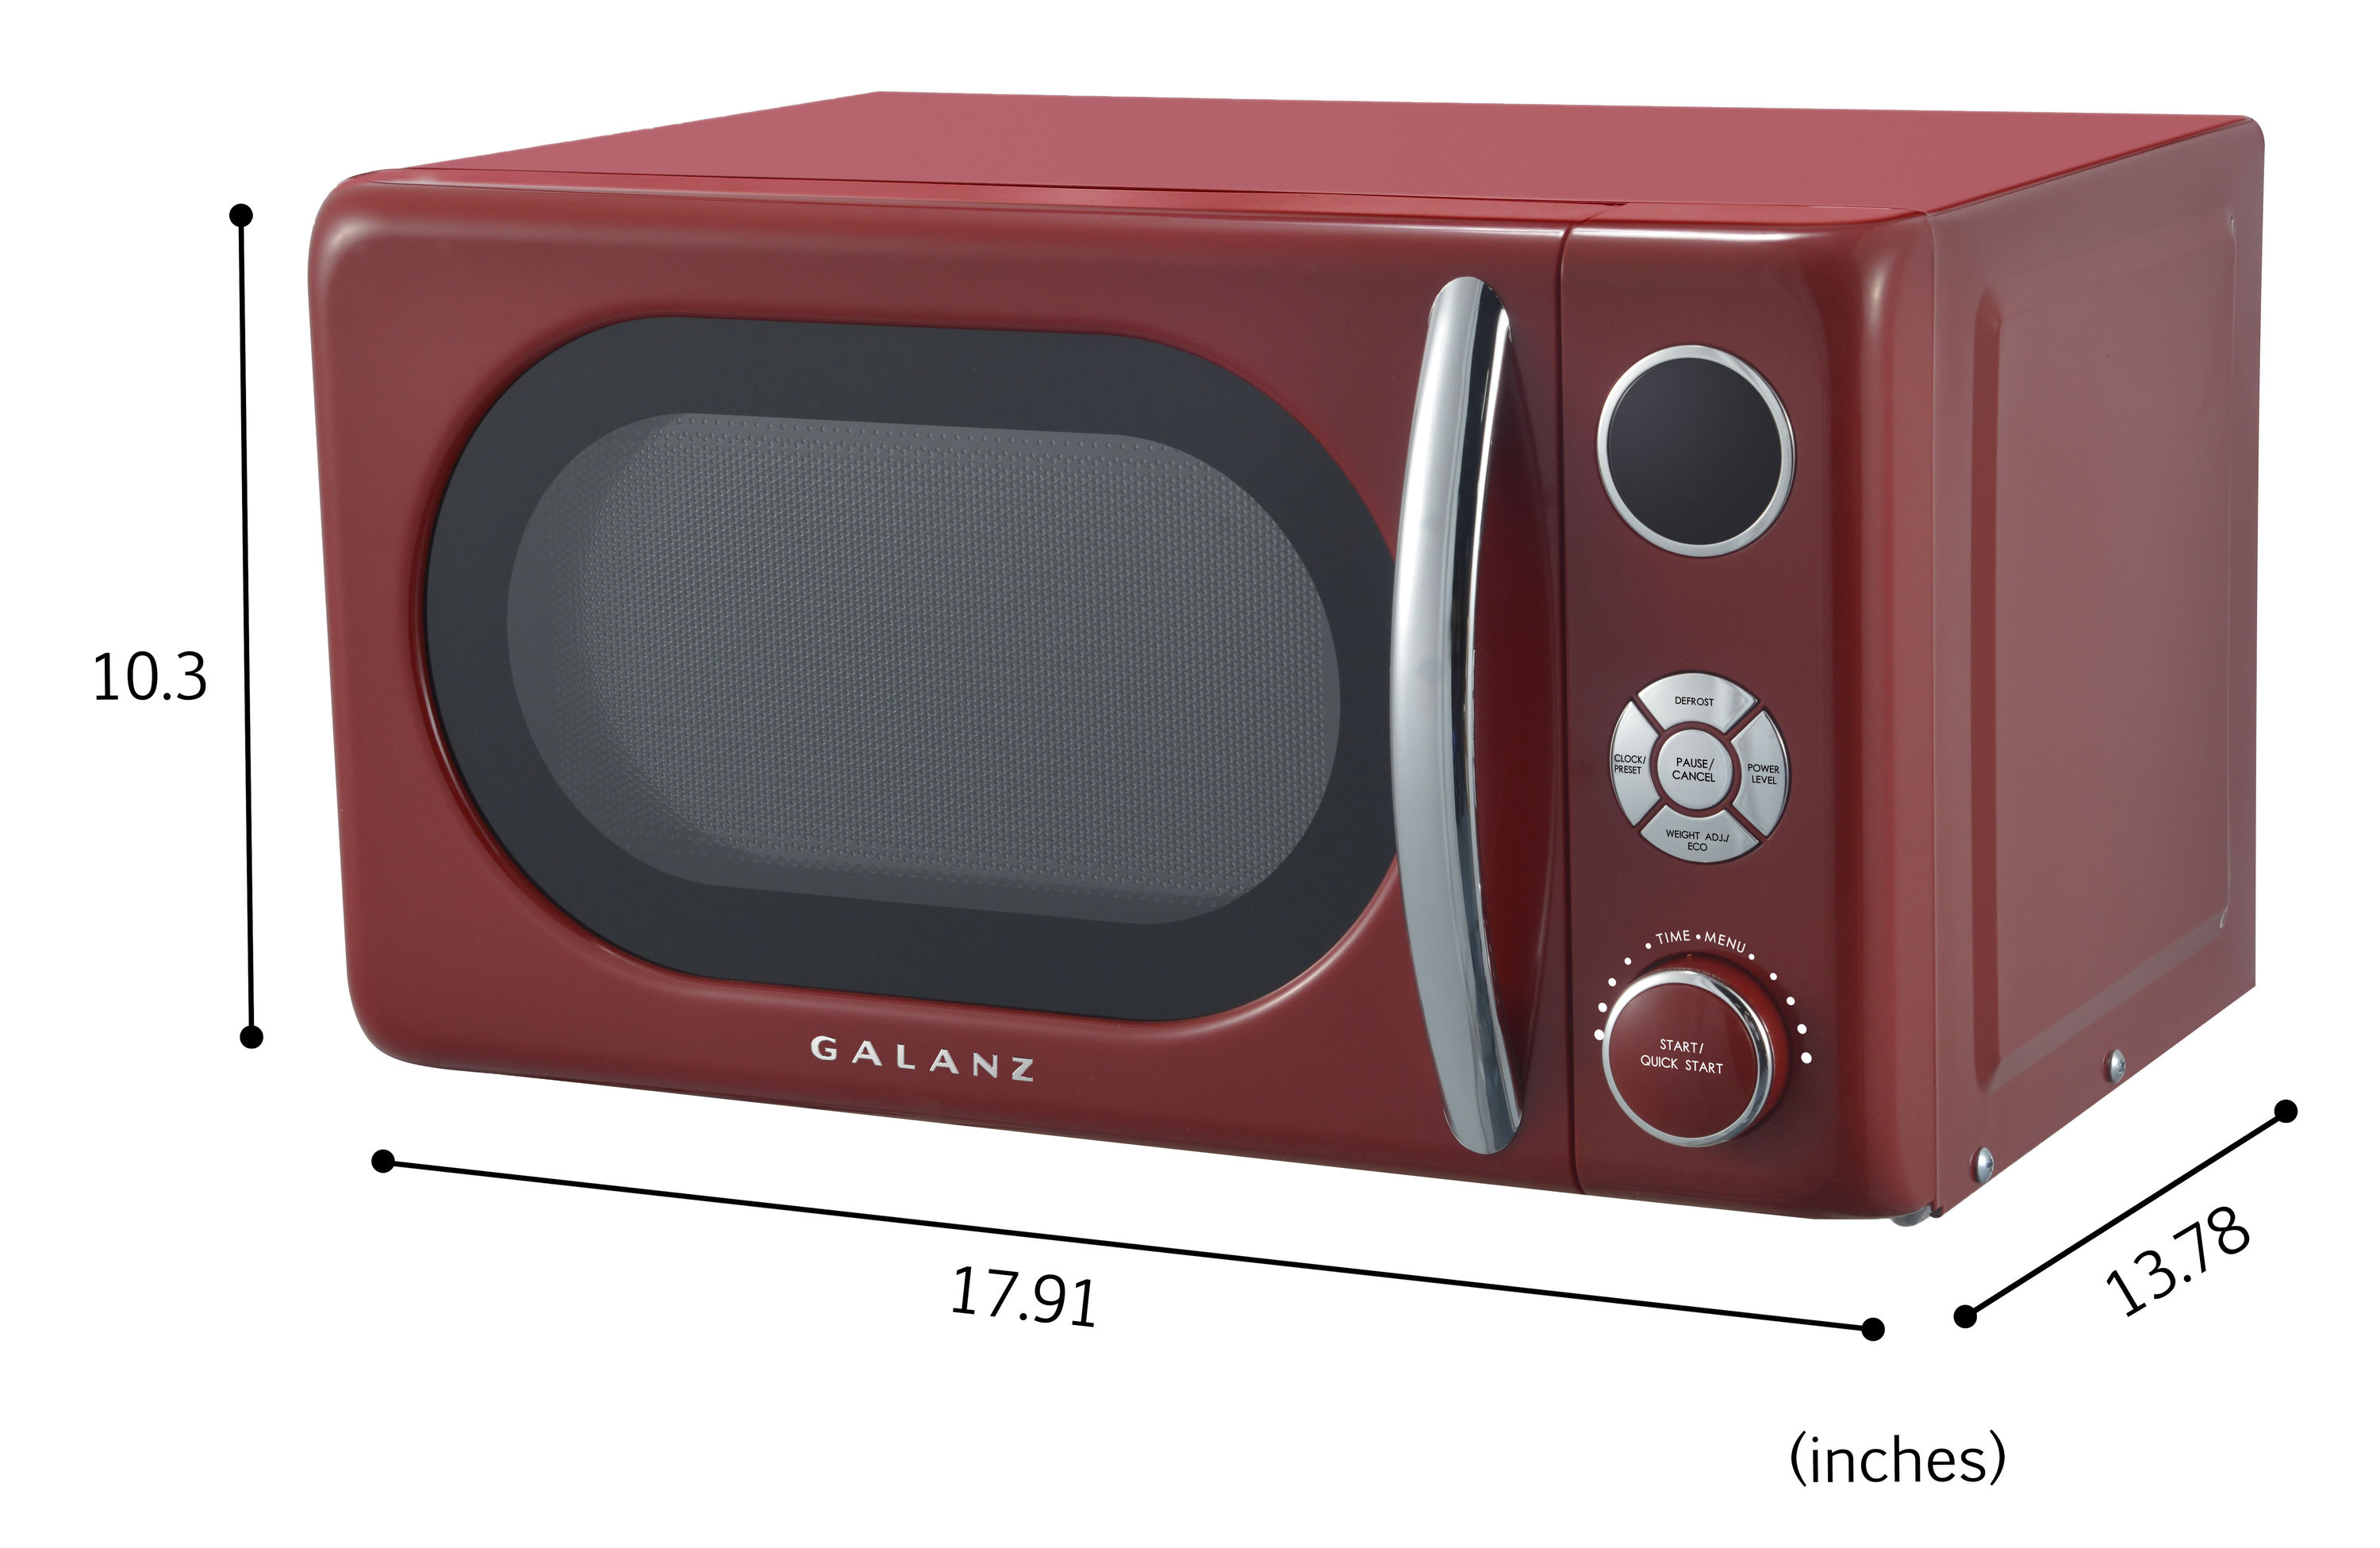 Comfee Retro 0.9-cu ft 900-Watt Countertop Microwave (Red) in the